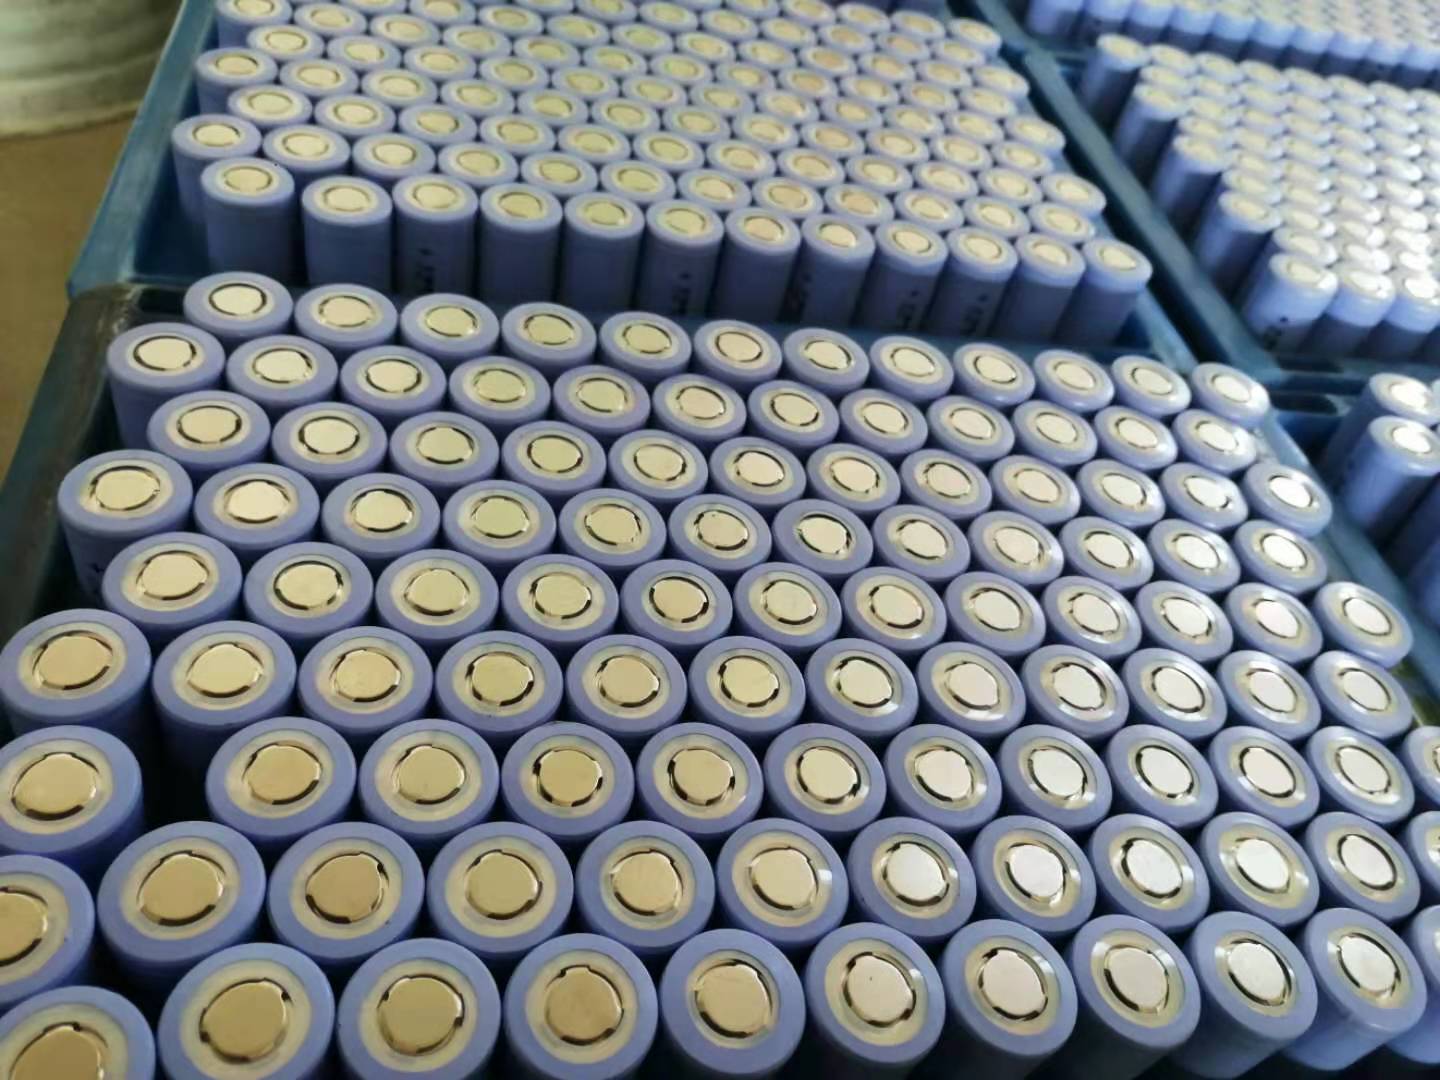 21700 batteries